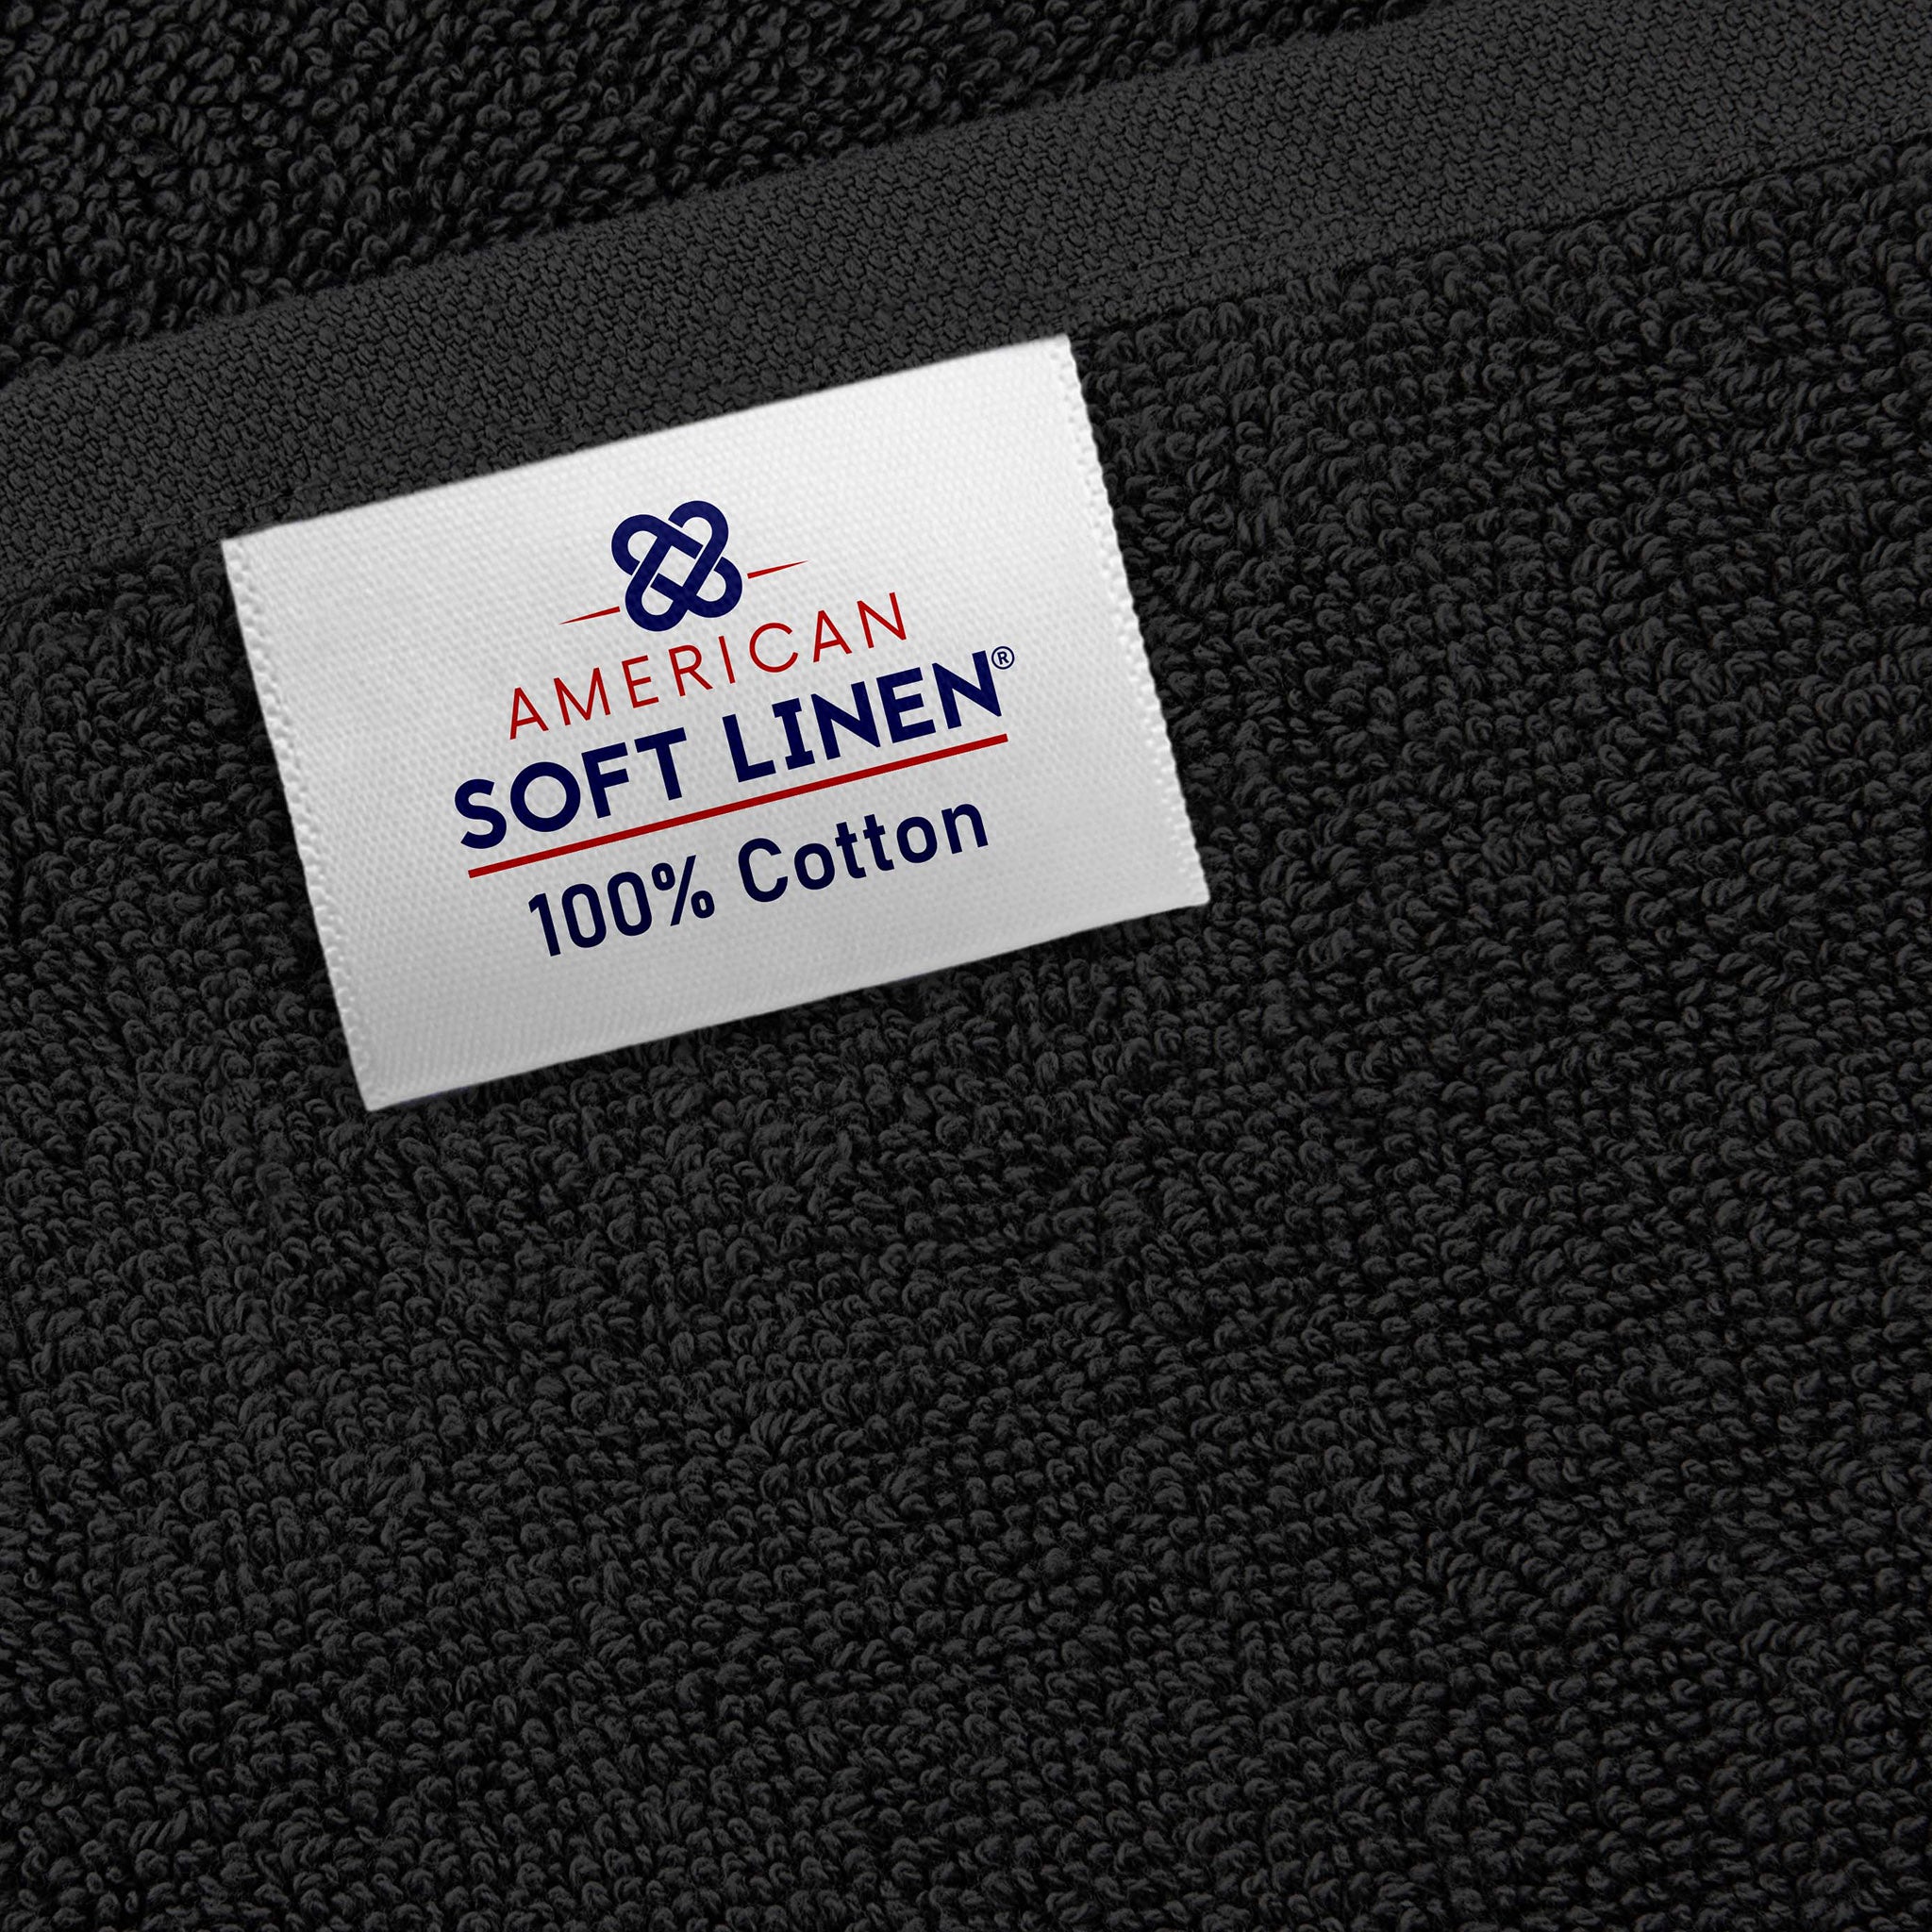 American Soft Linen 100% Ring Spun Cotton 40x80 Inches Oversized Bath Sheets black-6